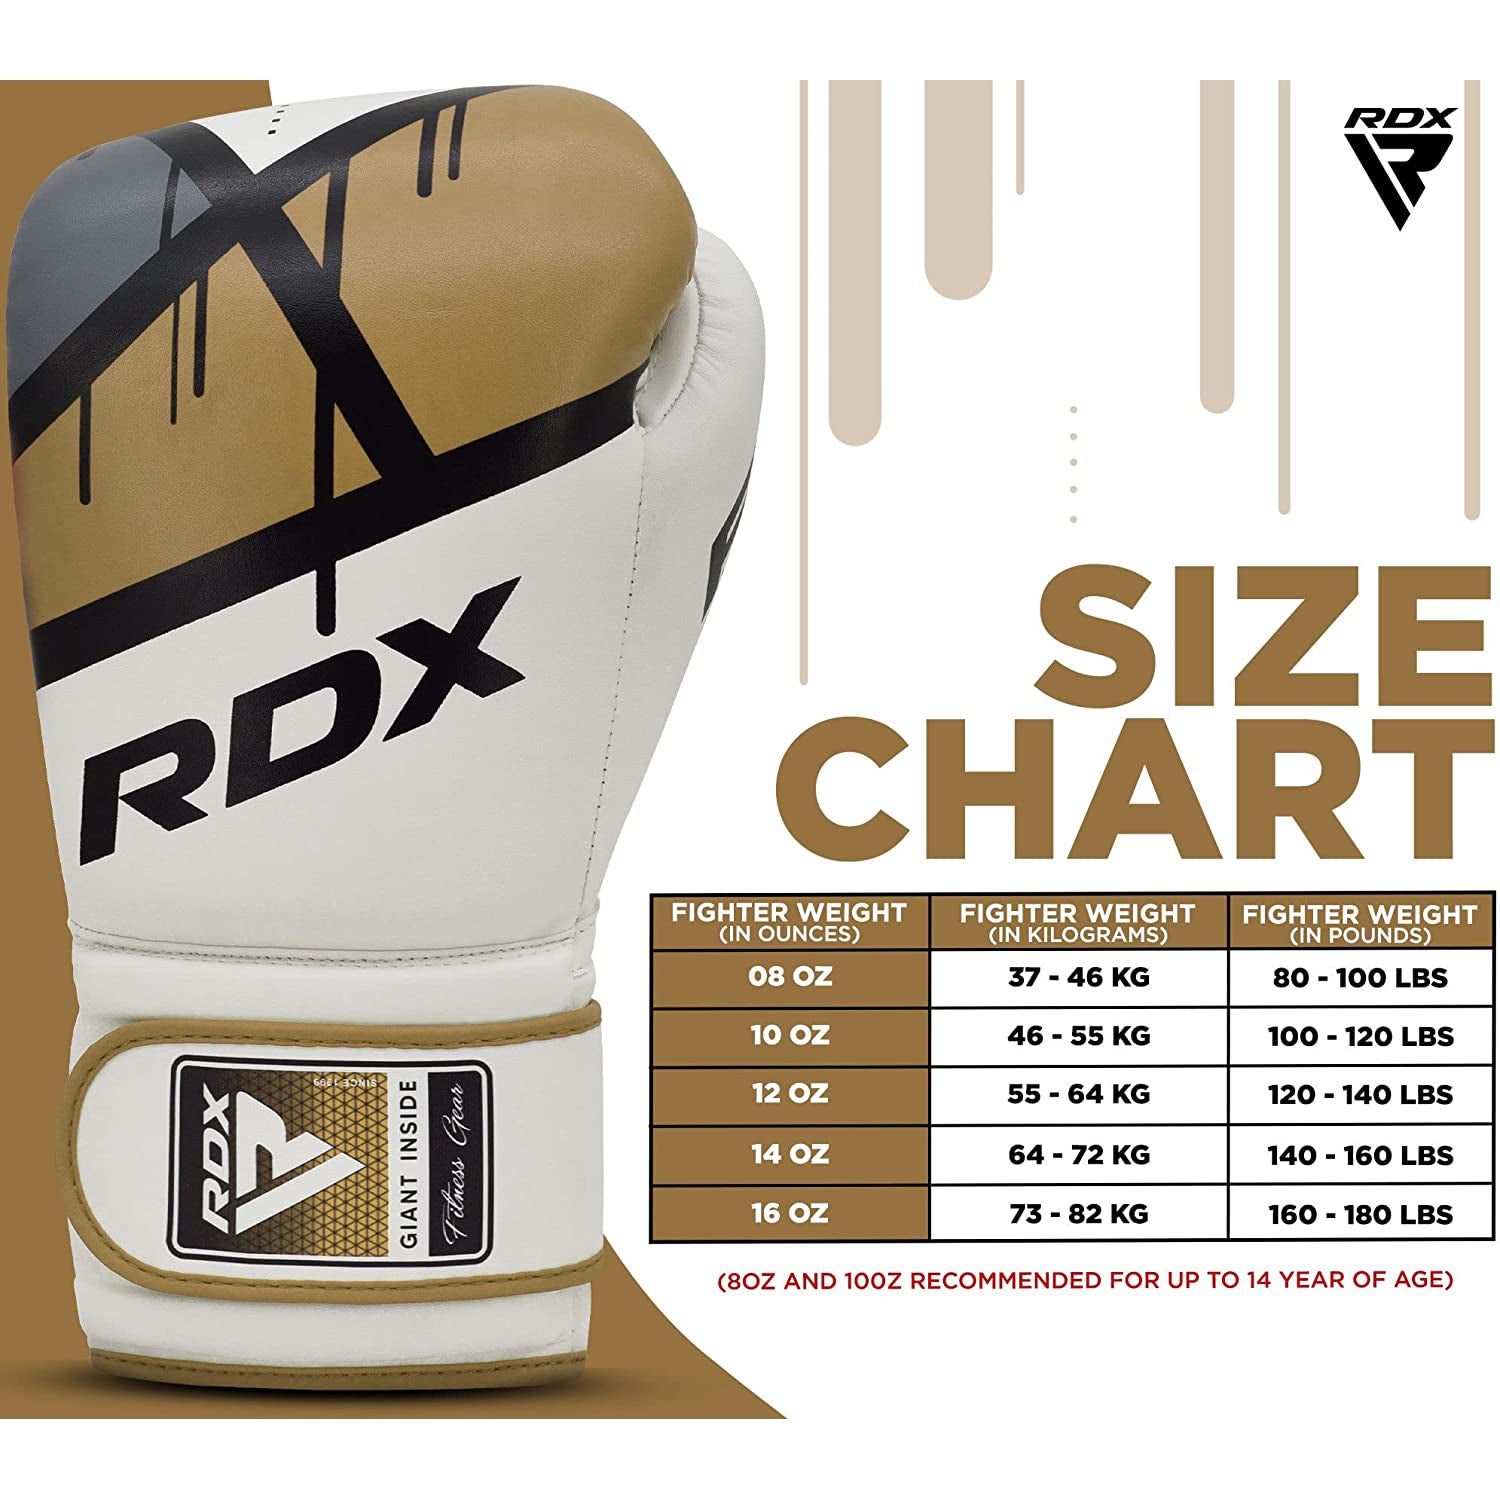 RDX F7 EGO MMA, BJJ, Muay Thai, Kickboxing, Training Boxing Gloves - GOLDEN - 16OZ - Pro-Distributing